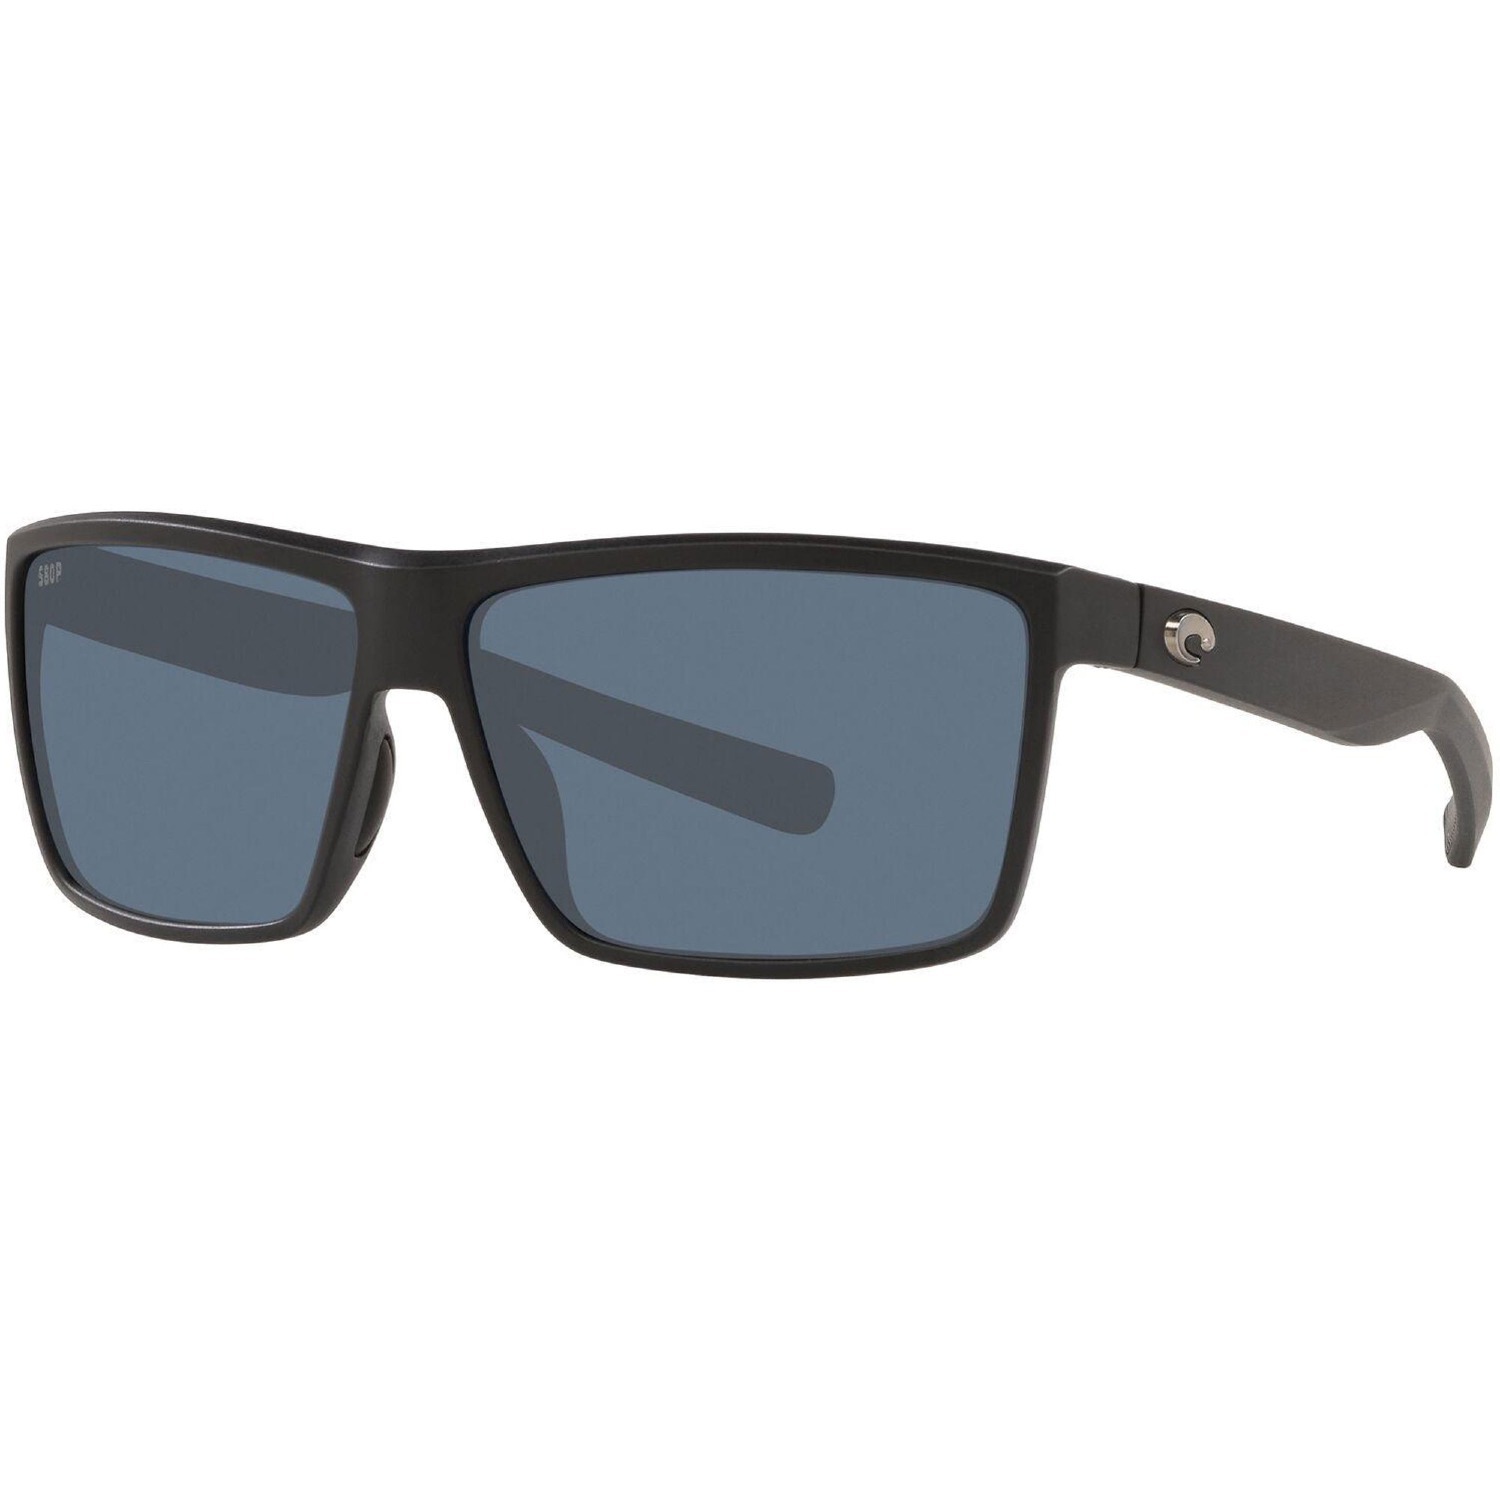 Costa Del Mar Men's Sunglasses $54.20, Ray-Ban Mirror Lens $66.20, Timberland Sunglasses $28.66 & More + Free Shipping w/ $50+